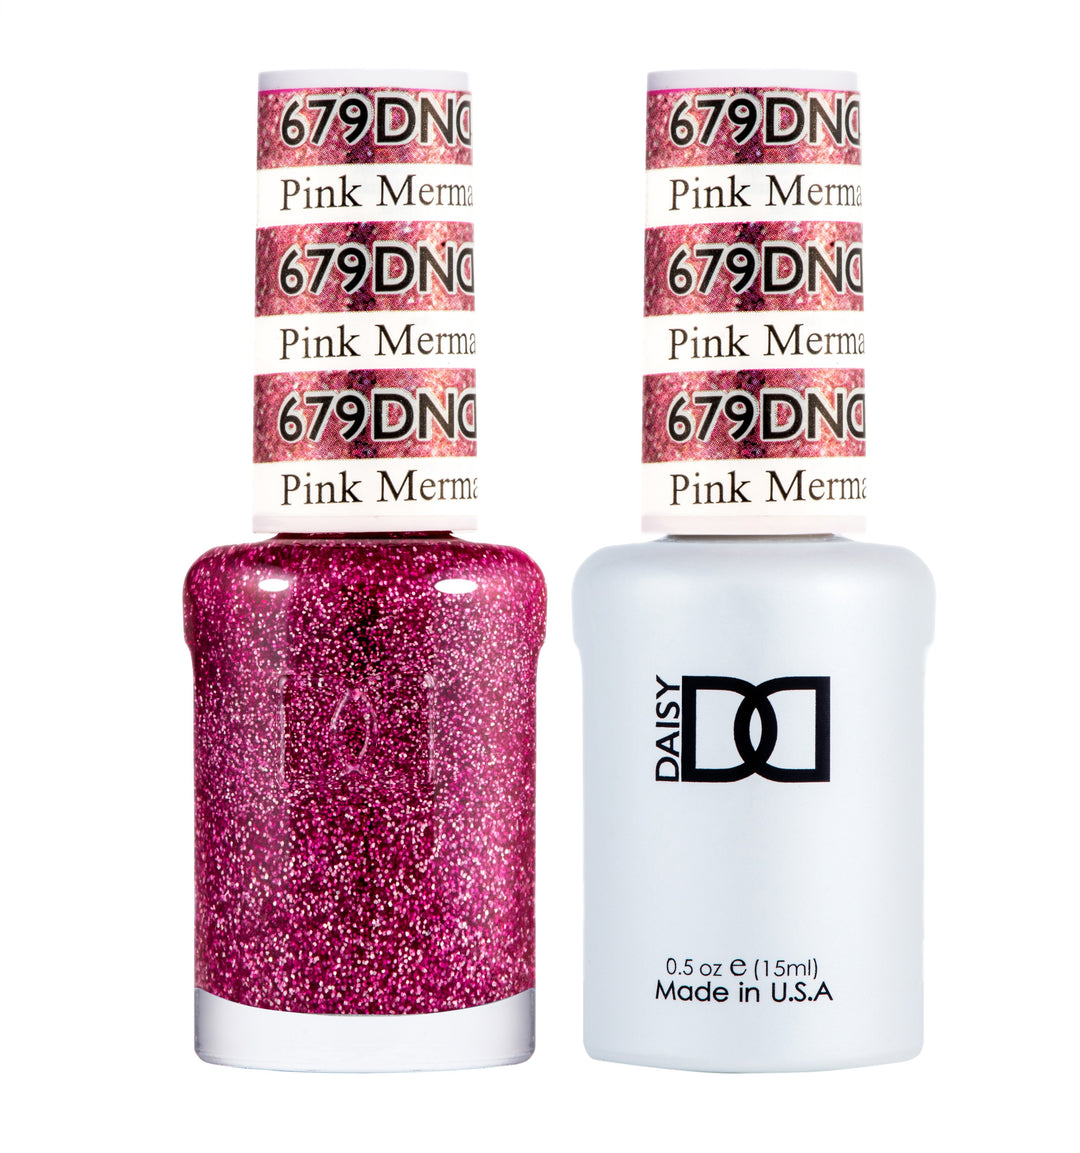 DND DUO Nail Lacquer and UV|LED Gel Polish Pink Mermaid 679 (2 x 15ml)